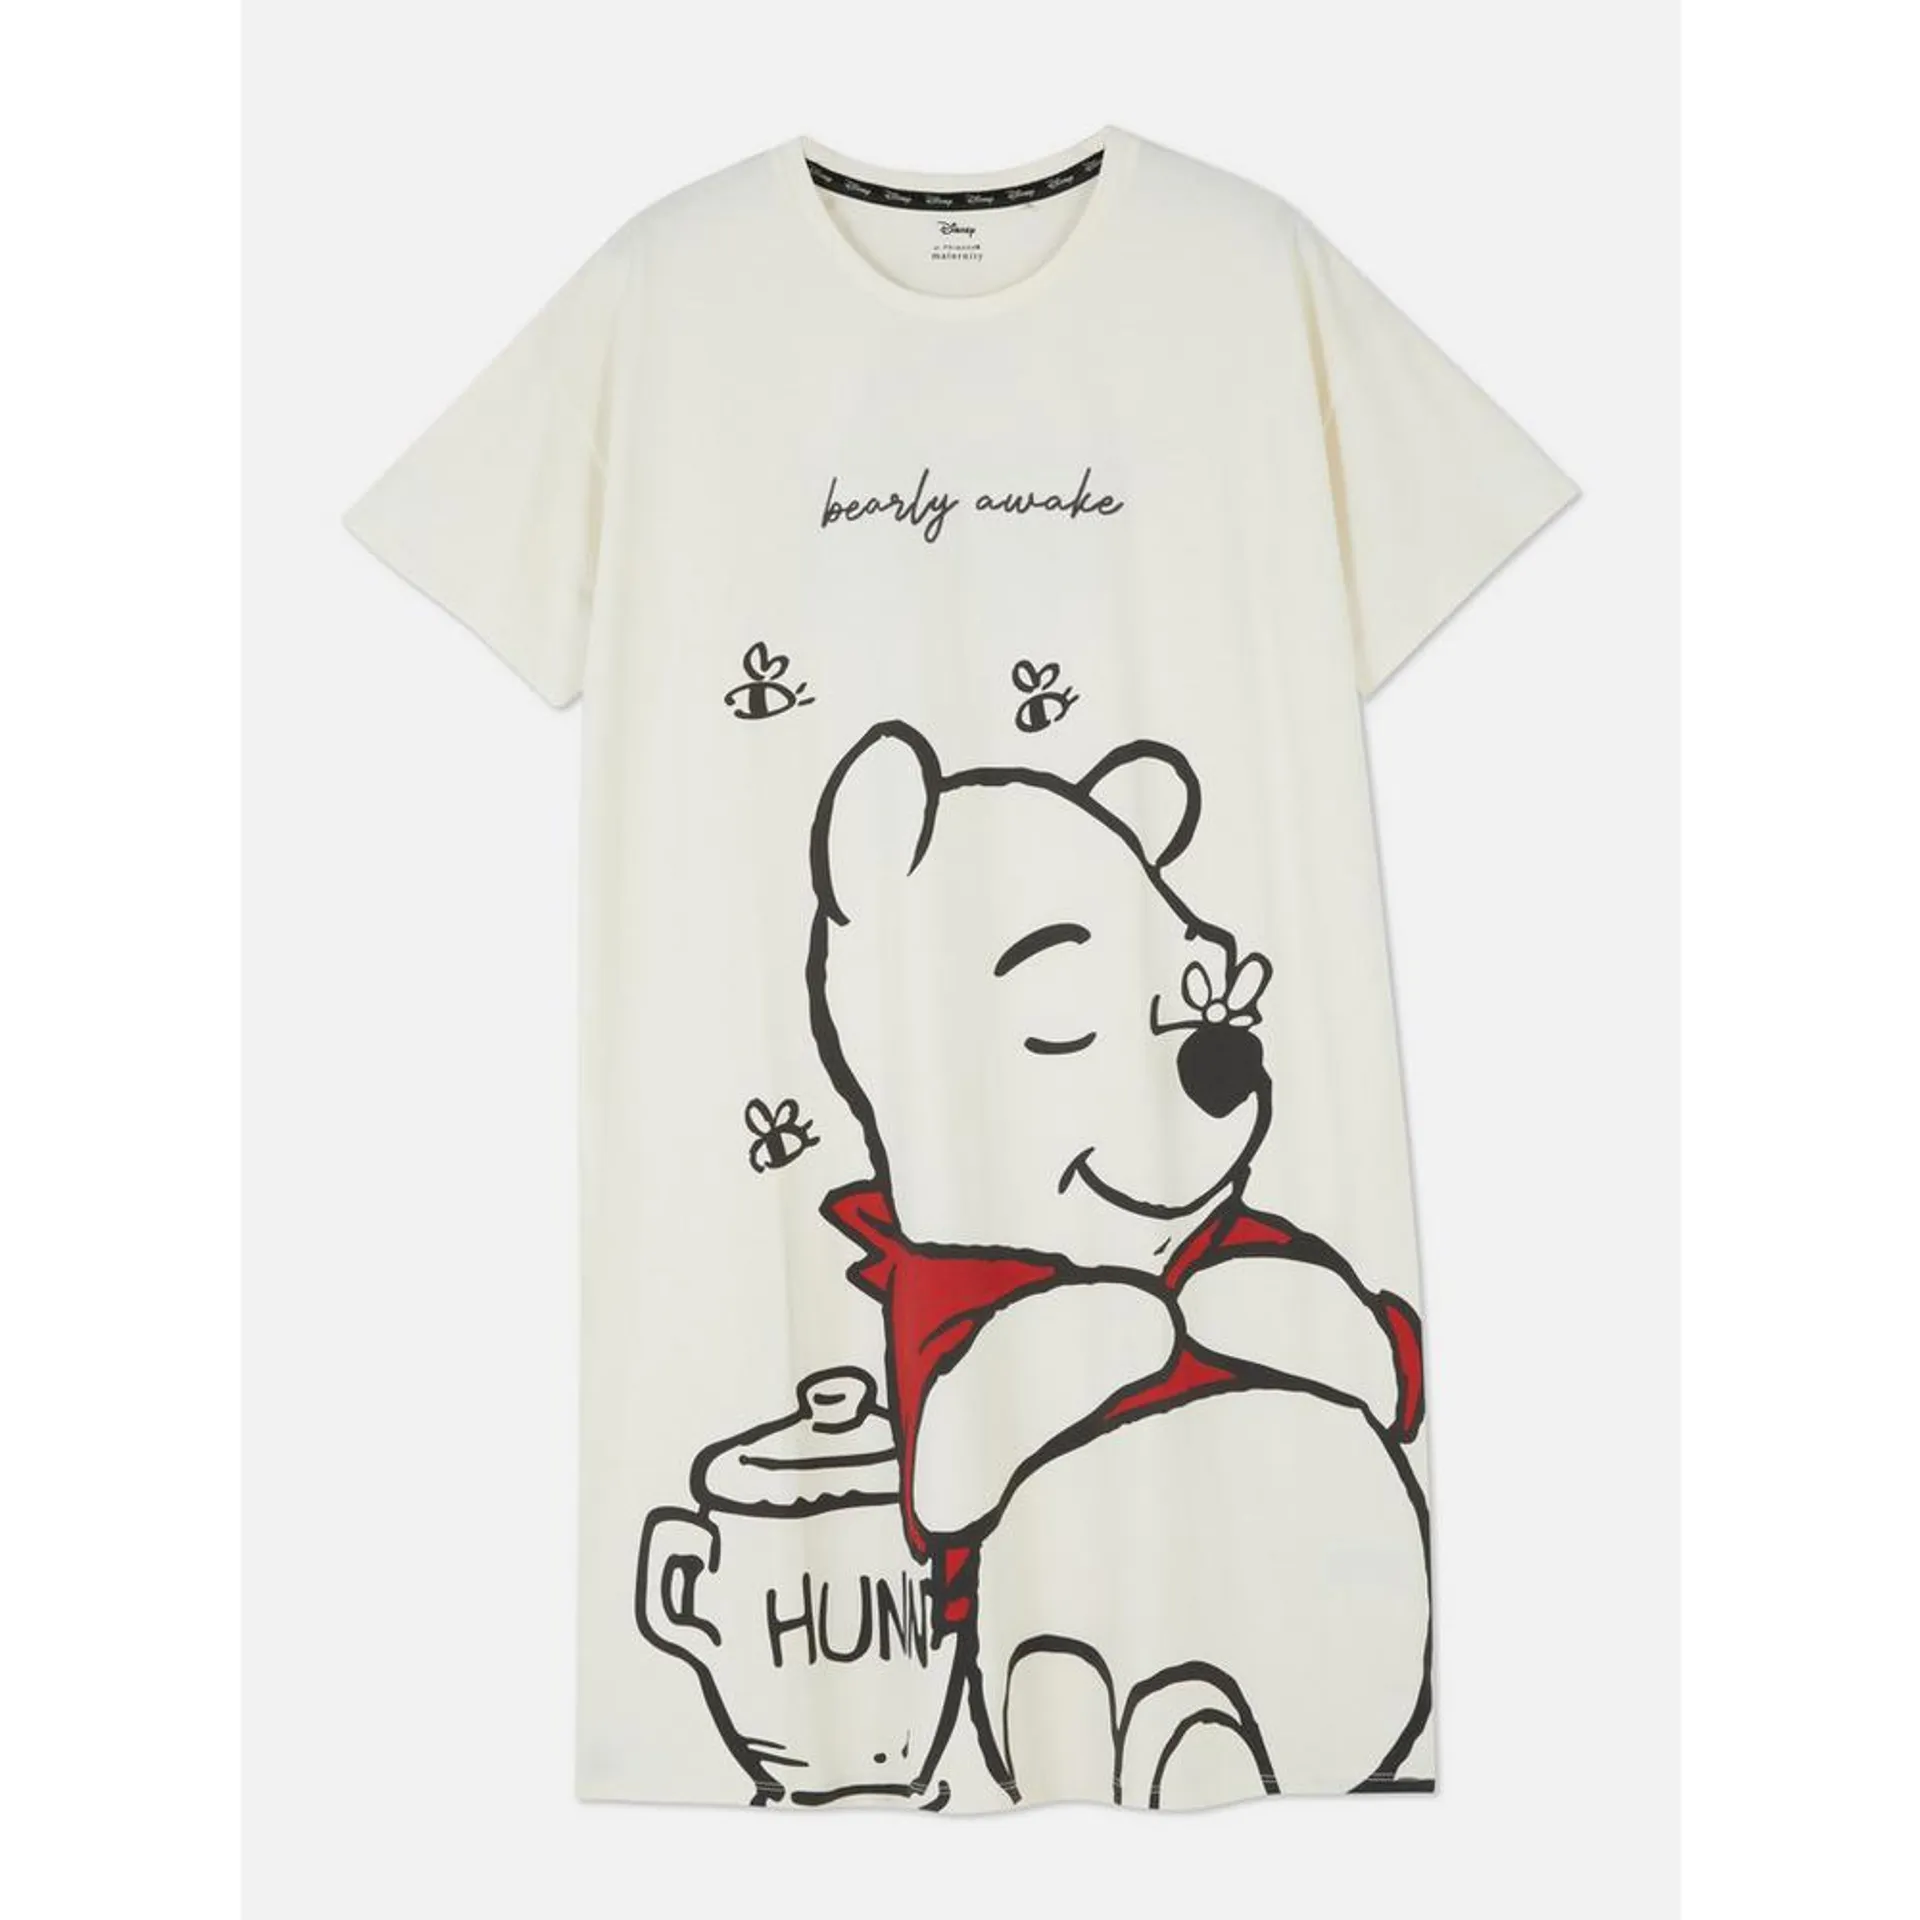 Camiseta de pijama de Winnie the Pooh de Disney